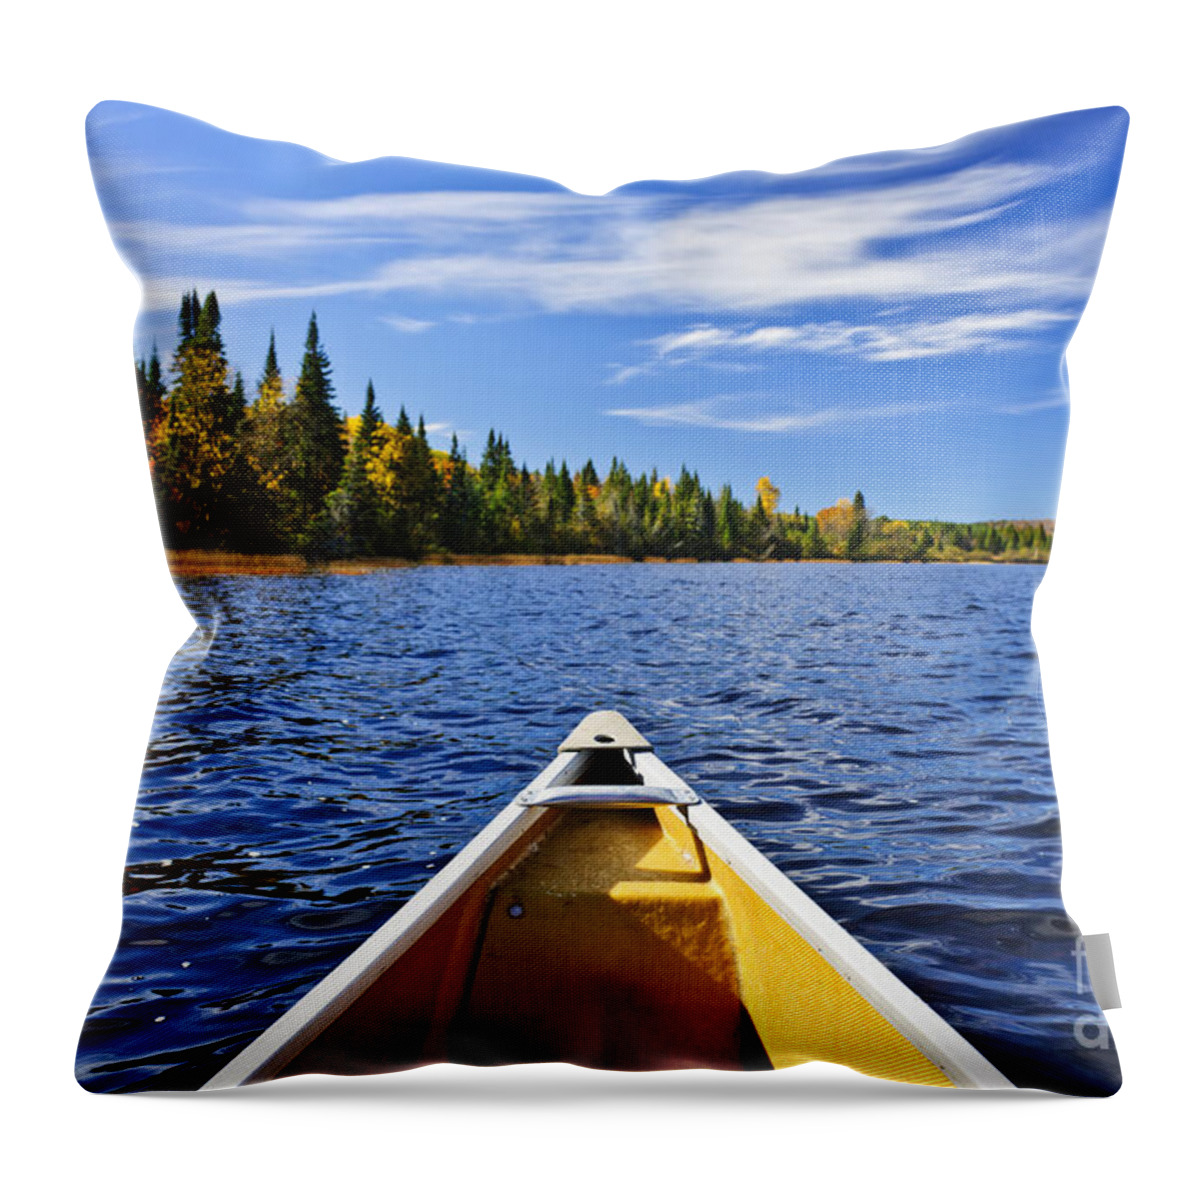 Canoe Throw Pillow featuring the photograph Canoe bow on lake by Elena Elisseeva